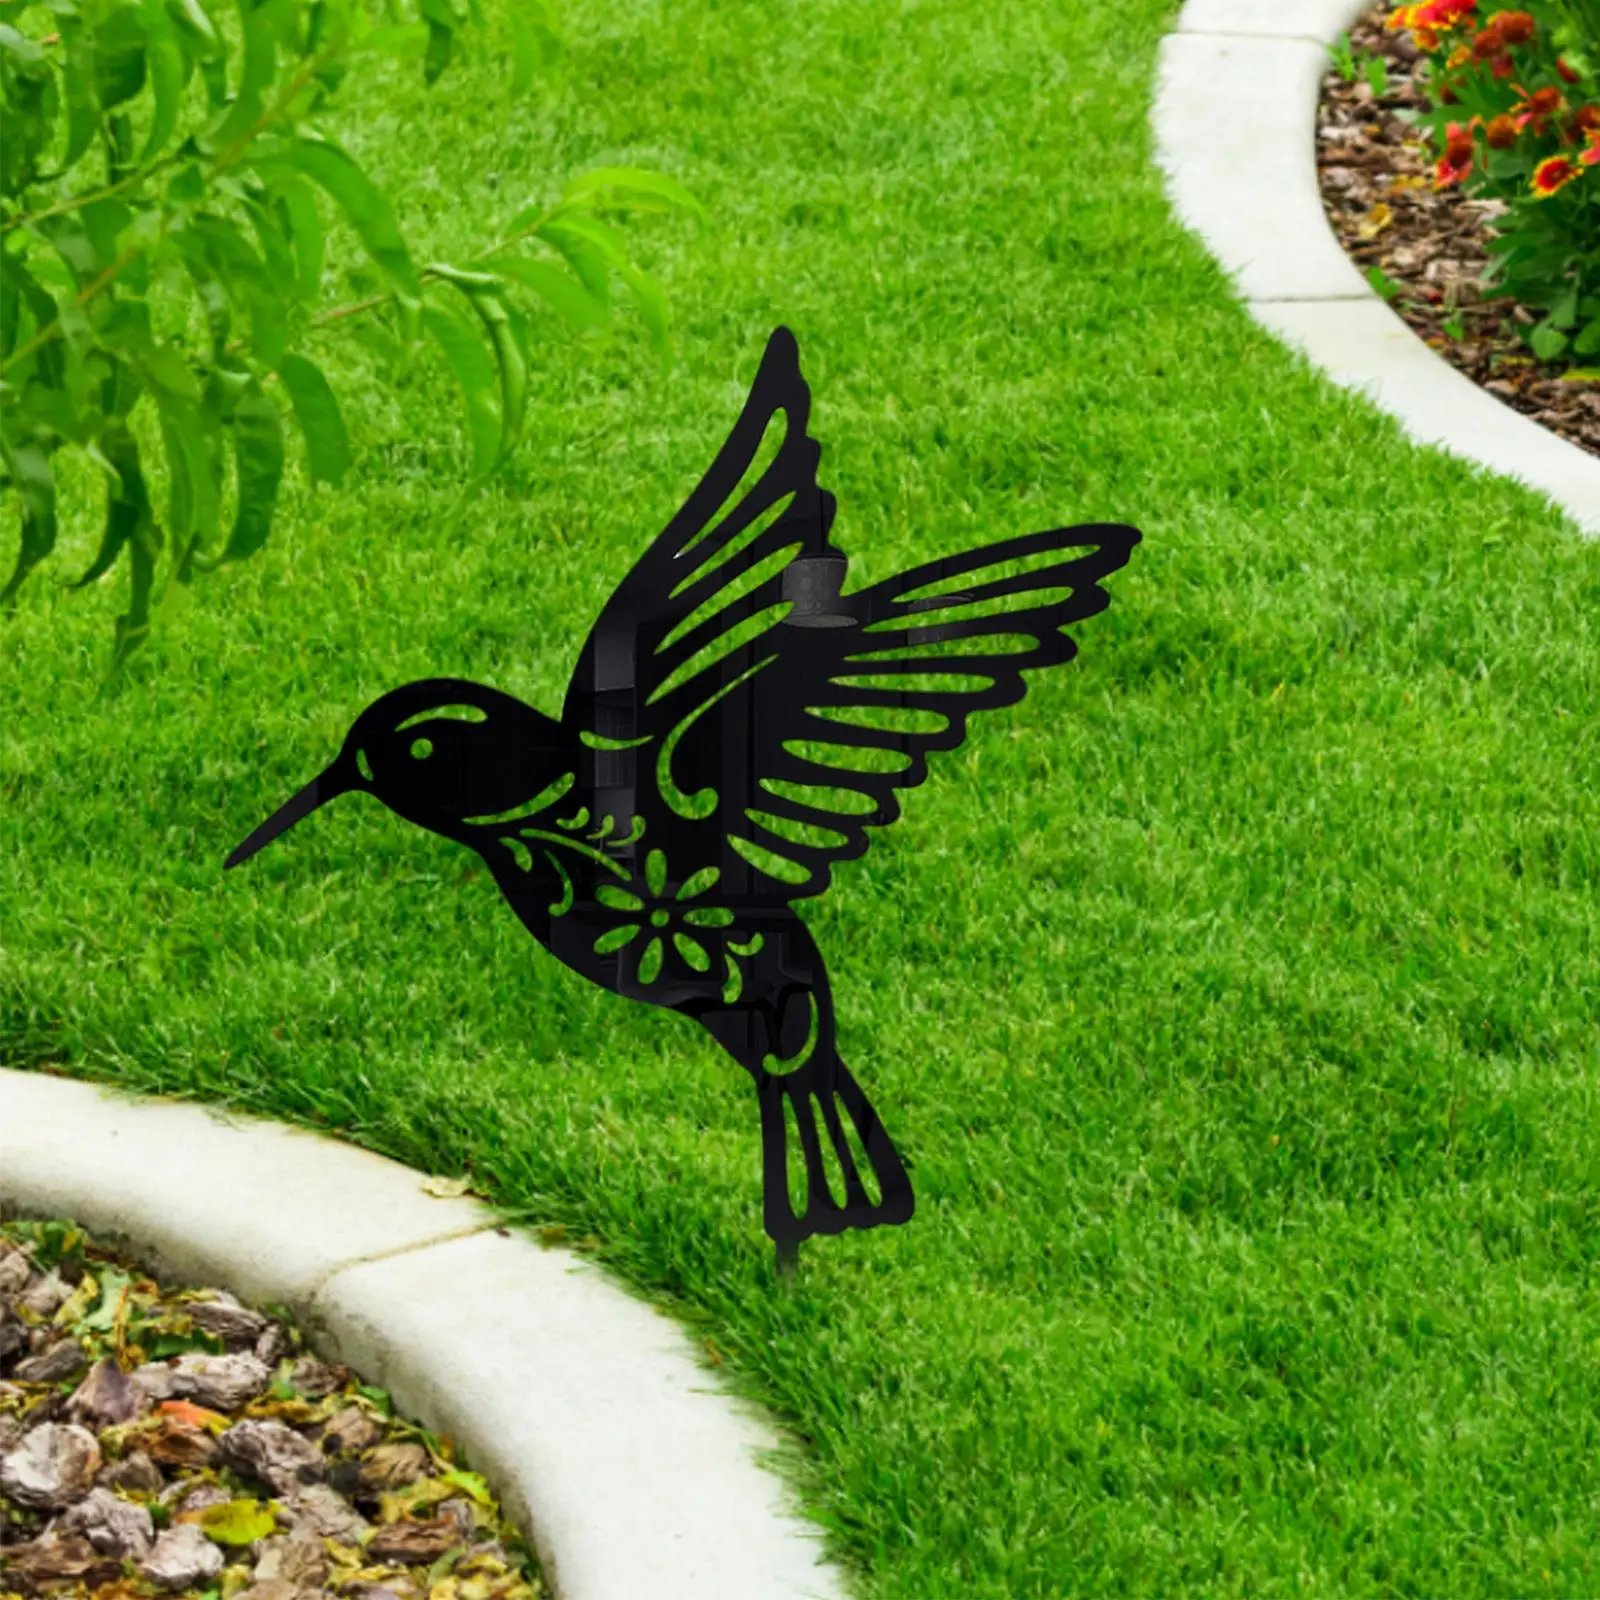 Acrylic Bird Silhouettes Garden Decor Hummingbird Decor Ground Stake Bird Art Sculpture for Tree Lawn Backyard Decor Ornament